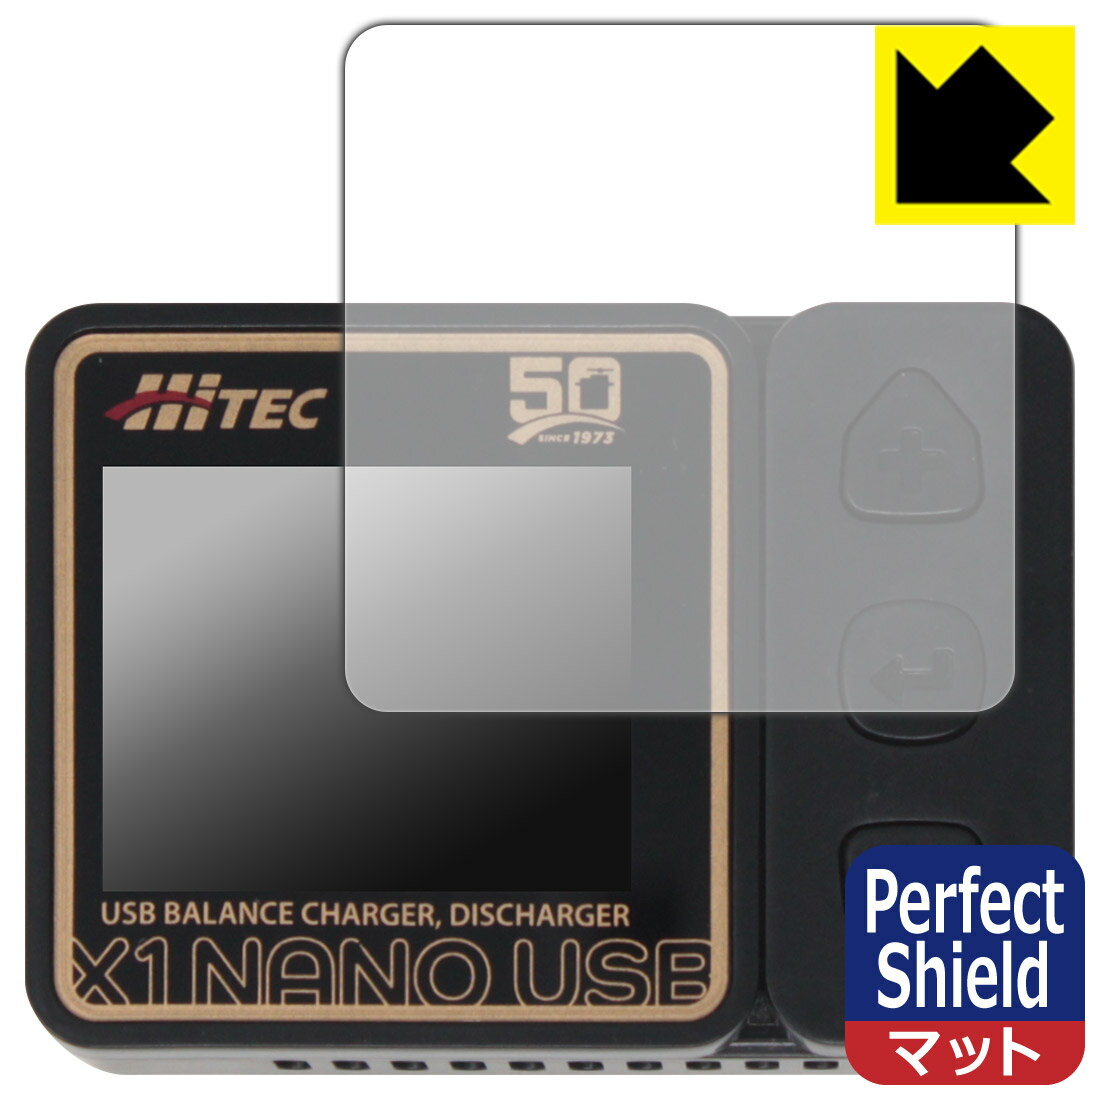 HiTEC X1 NANO USB 用 Perfect Shield【反射低減】保護フィルム 日本製 自社製造直販